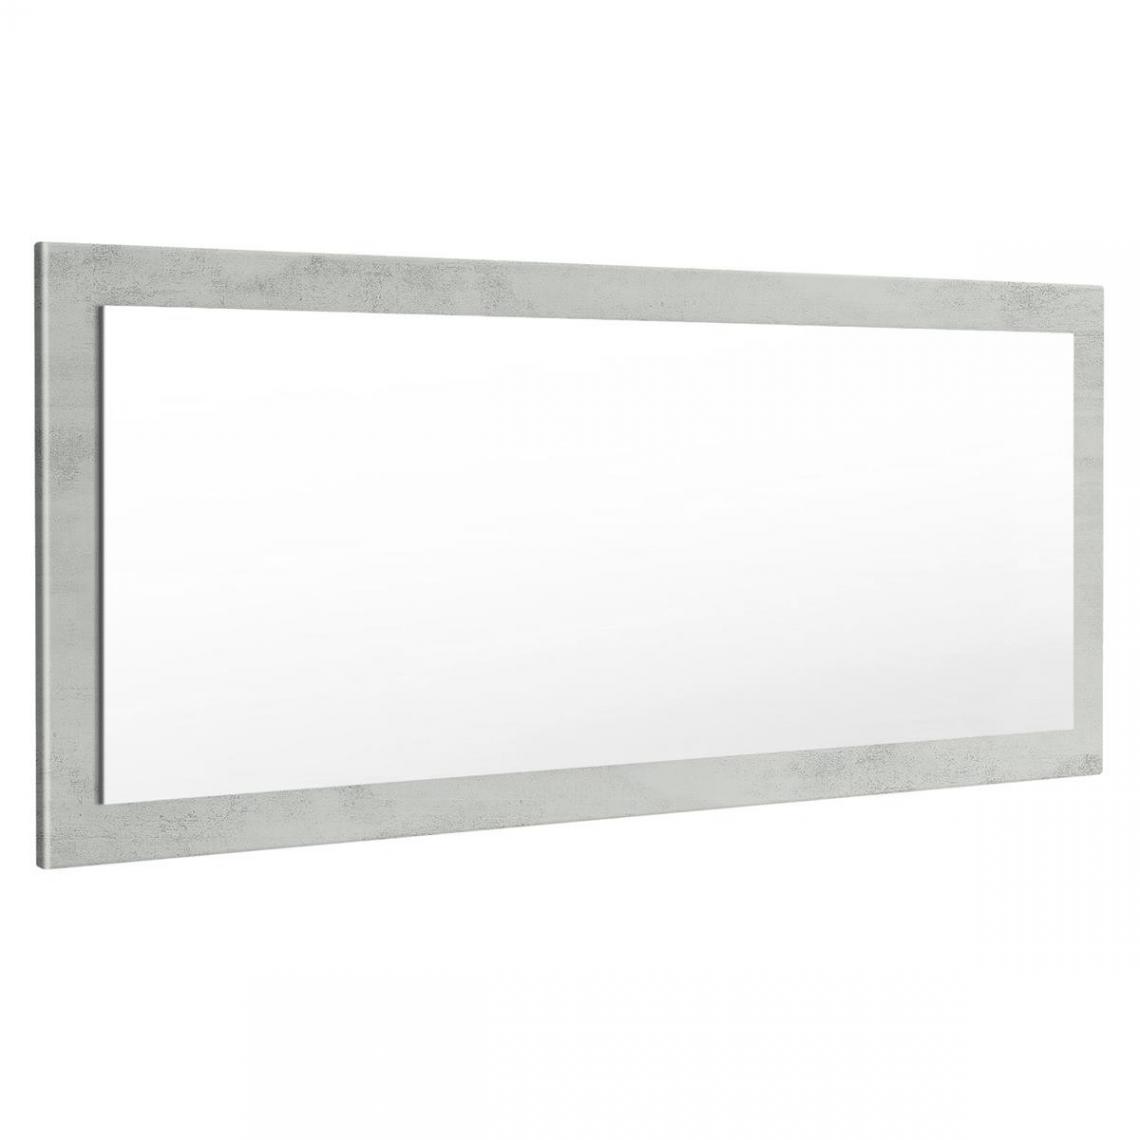 Mpc - Miroir aspect béton mat (HxLxP): 139 x 55 x 2 - Miroir de salle de bain